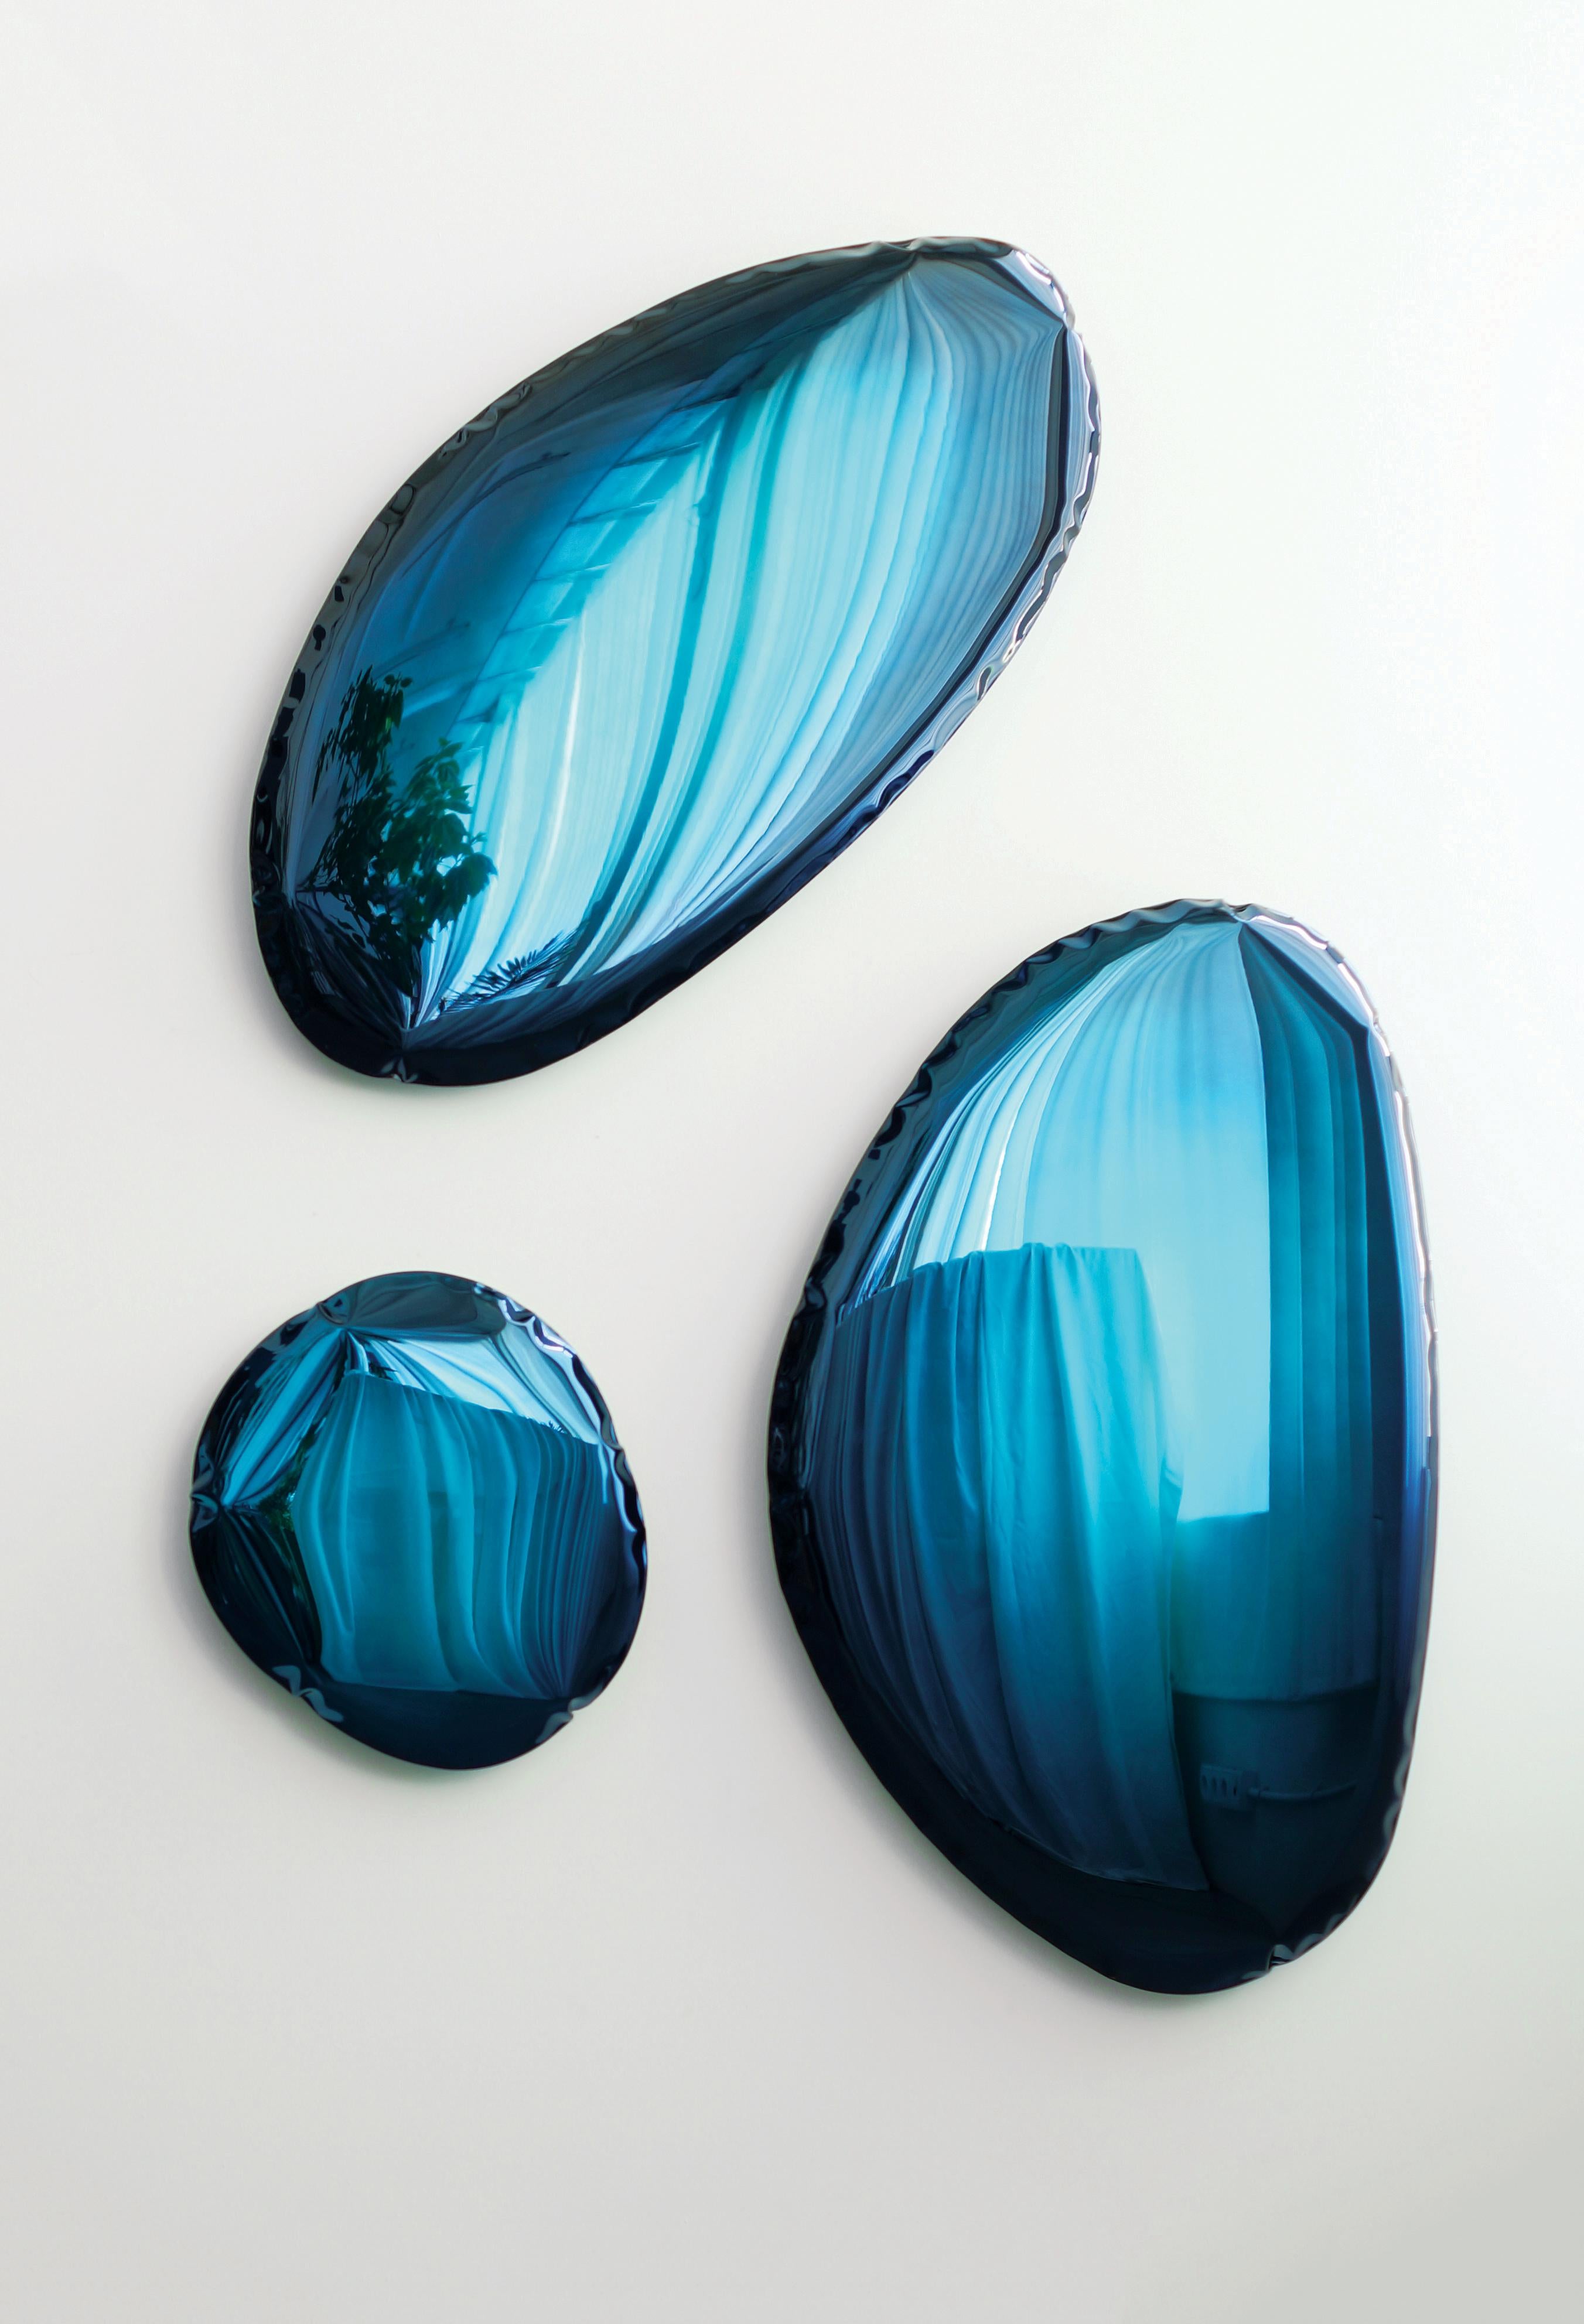 Polish Deep Space Blue Tafla O5 Wall Mirror by Zieta For Sale